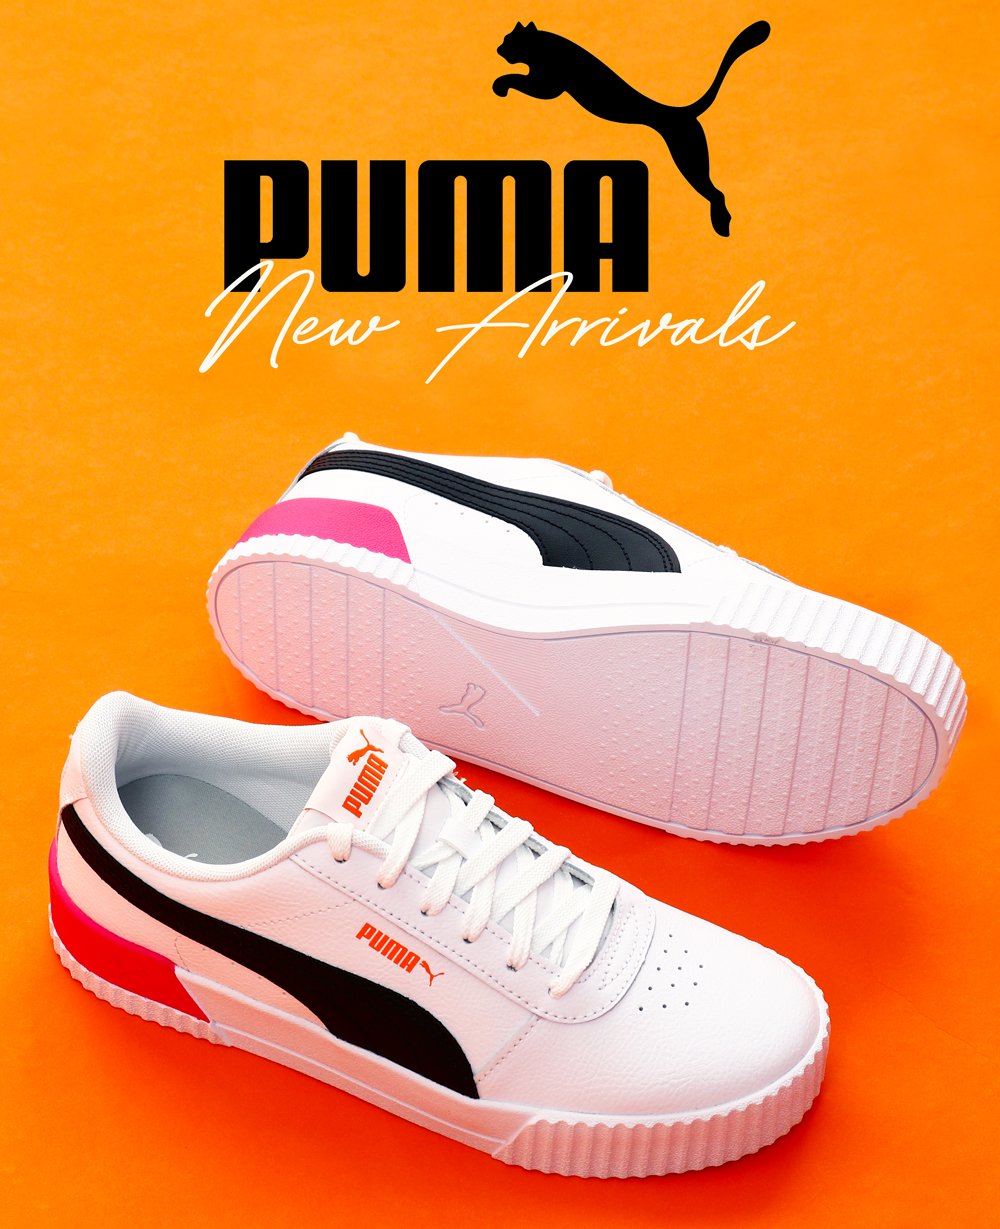 puma new arrival shoes